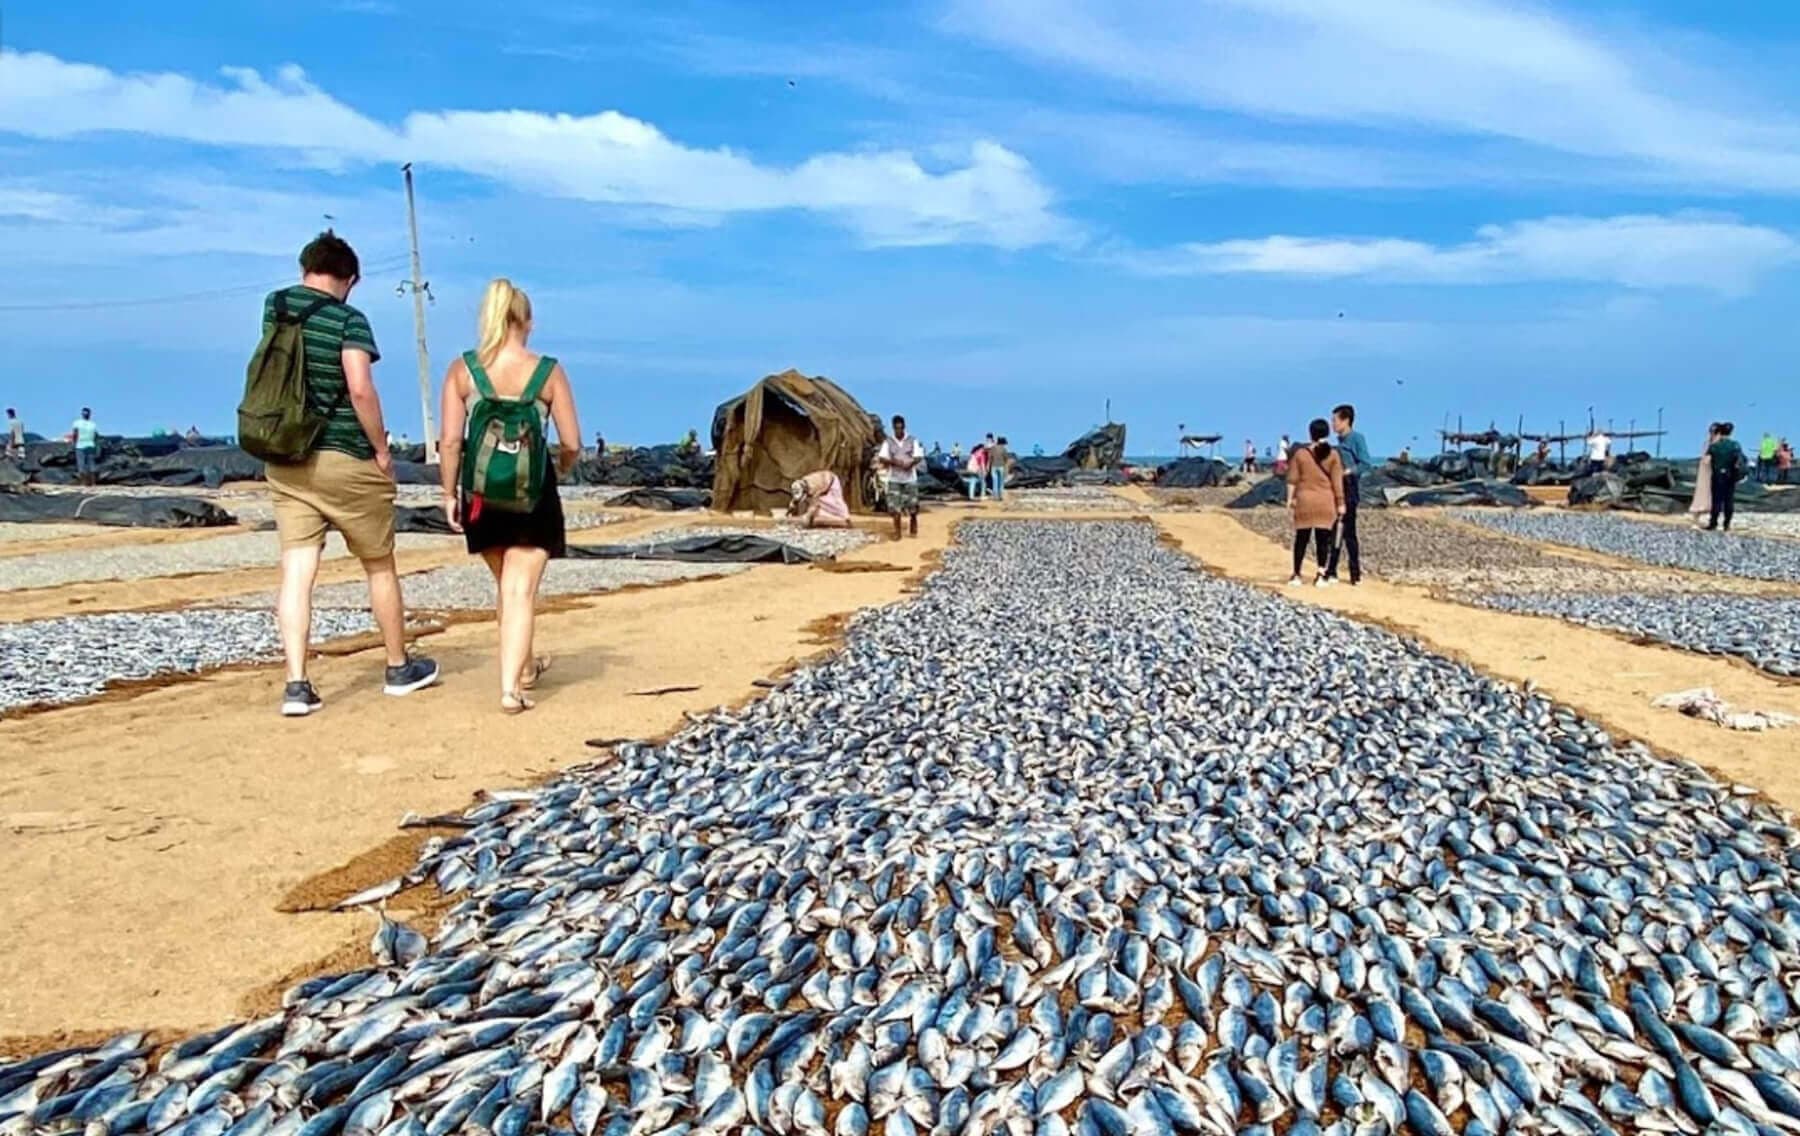 The fish is dried in the Negombo Fishing Village, Sri Lanka.